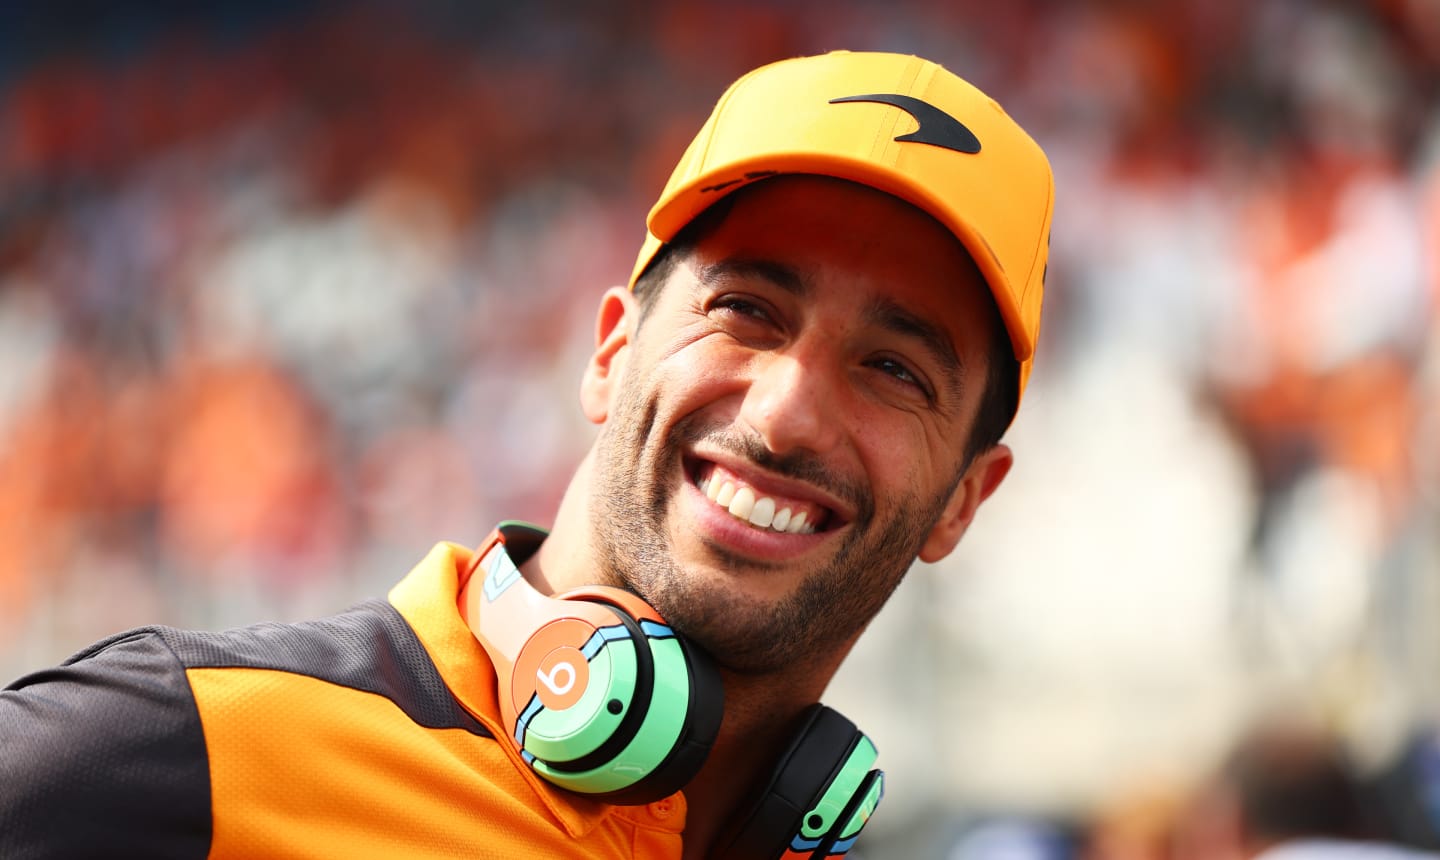 ZANDVOORT, NETHERLANDS - SEPTEMBER 04: Daniel Ricciardo of Australia and McLaren looks on from the